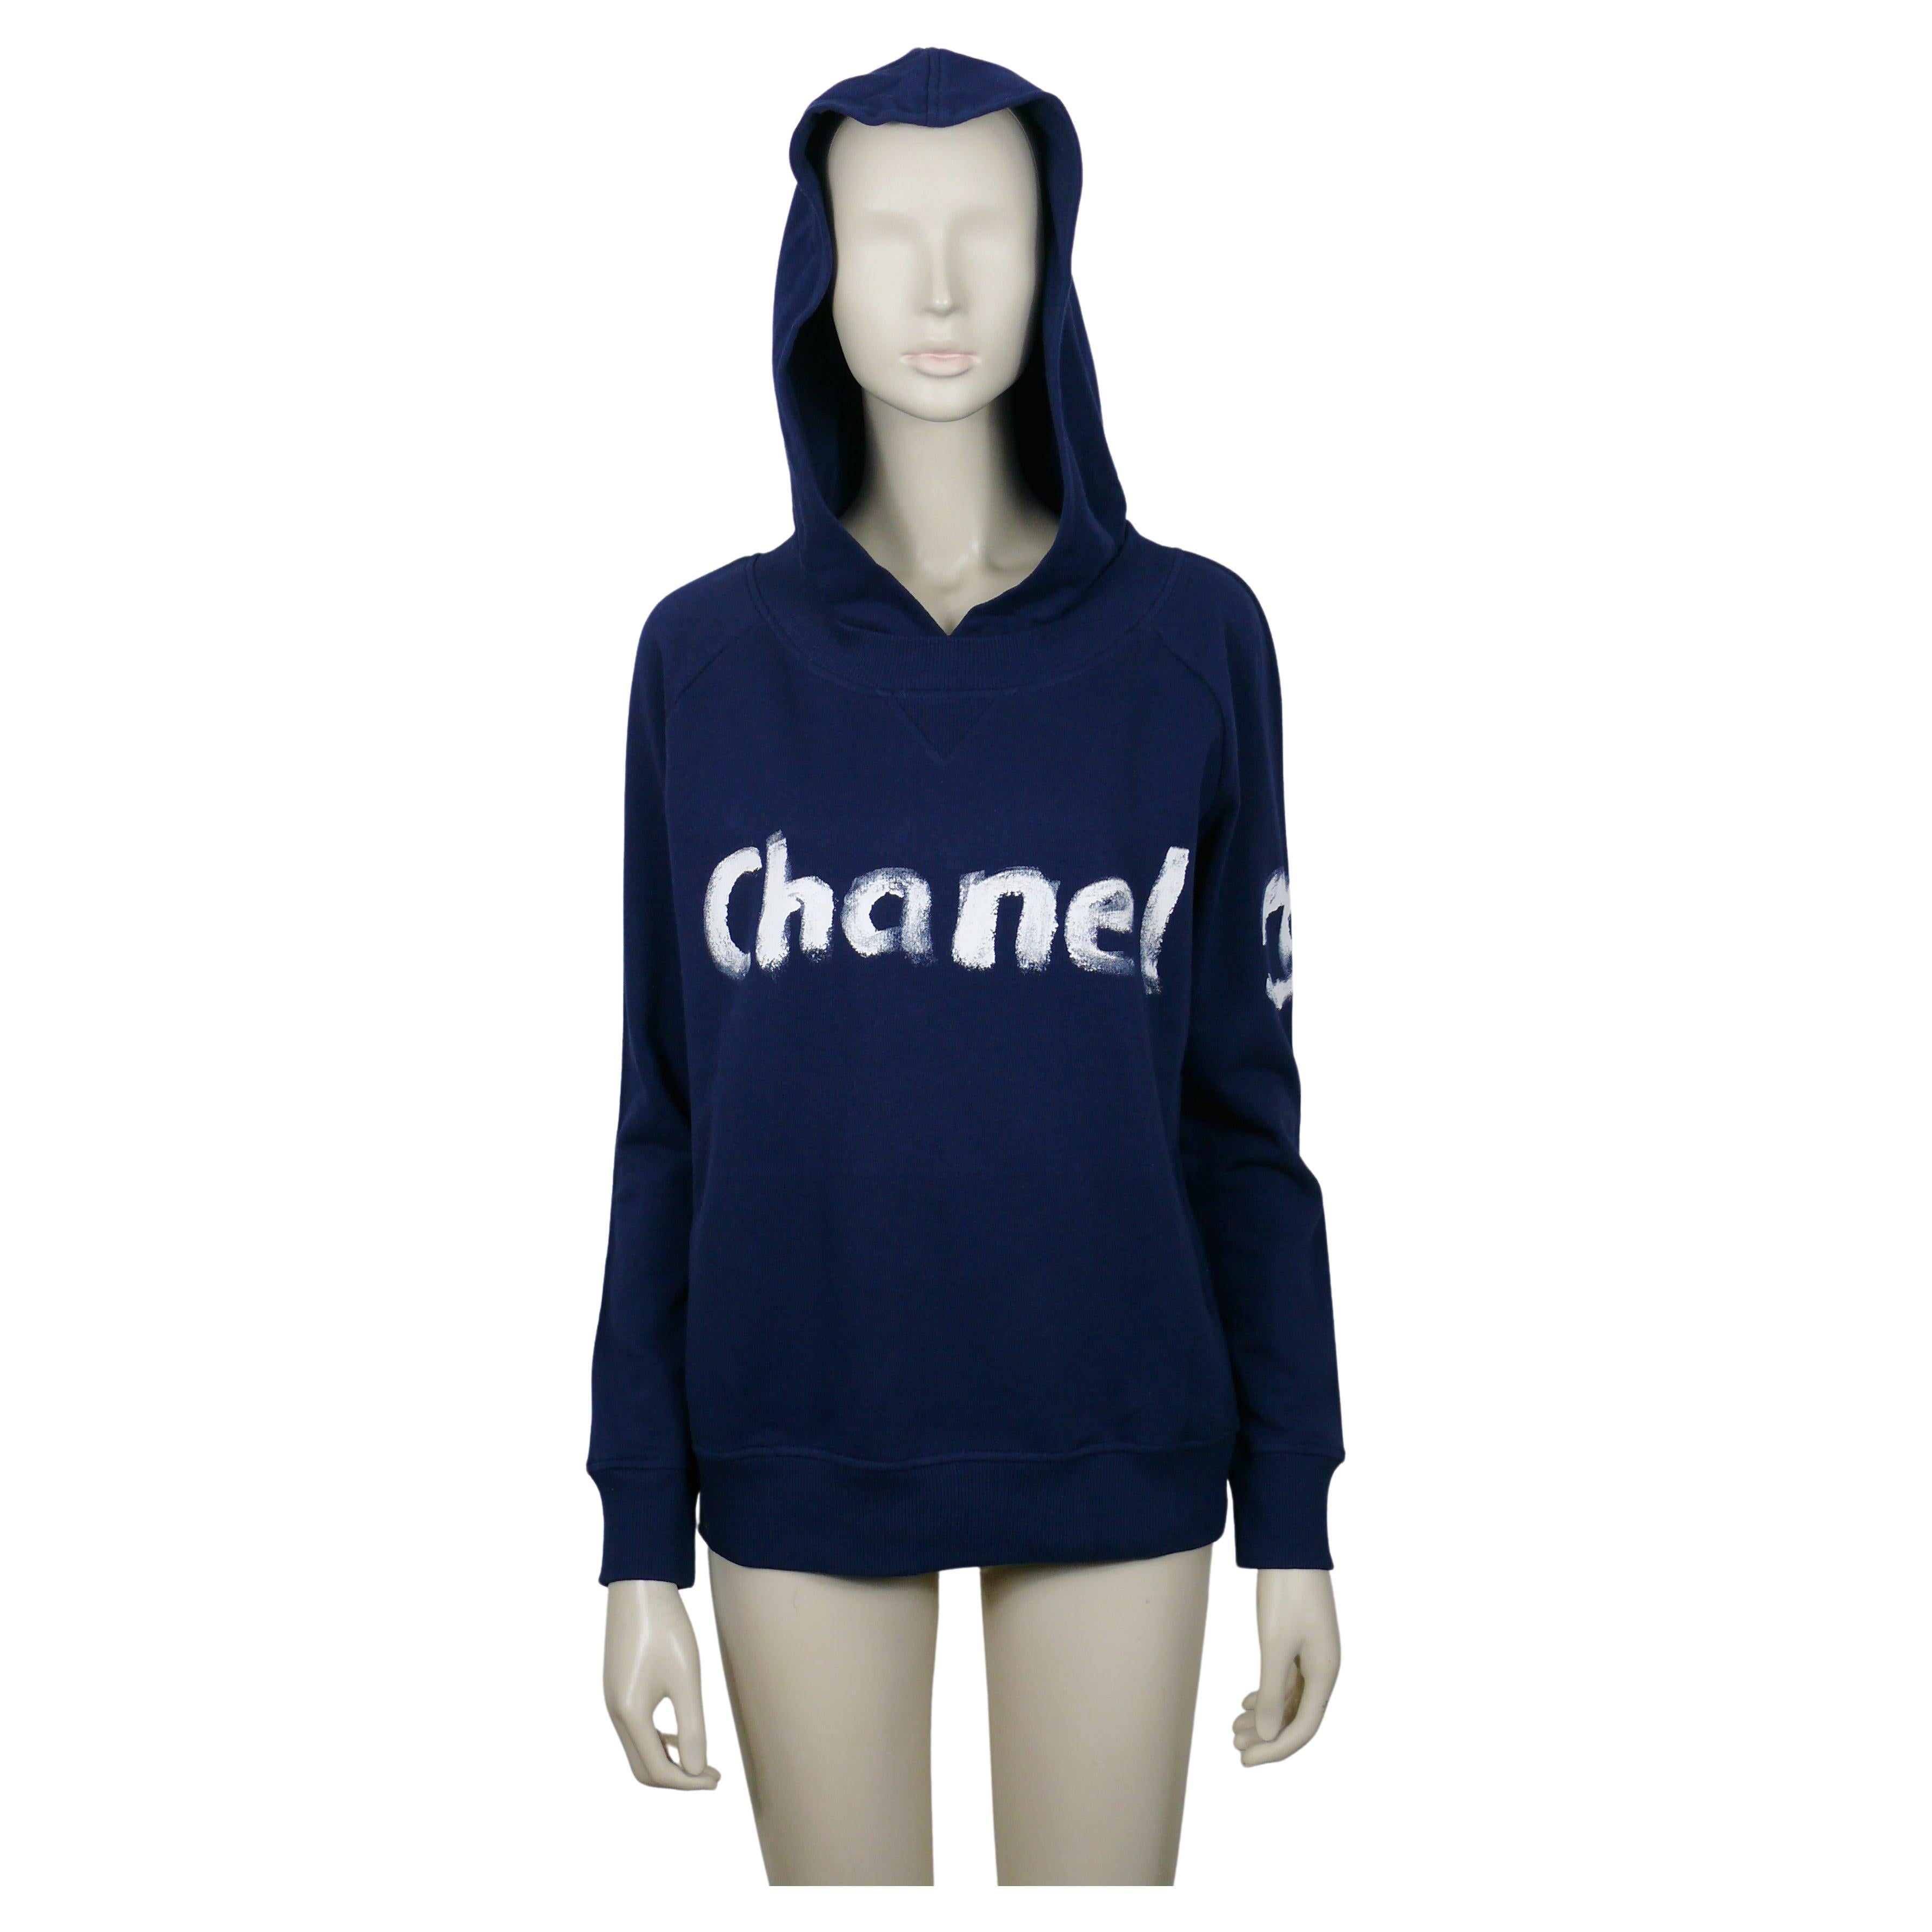 chanel hoodies women small